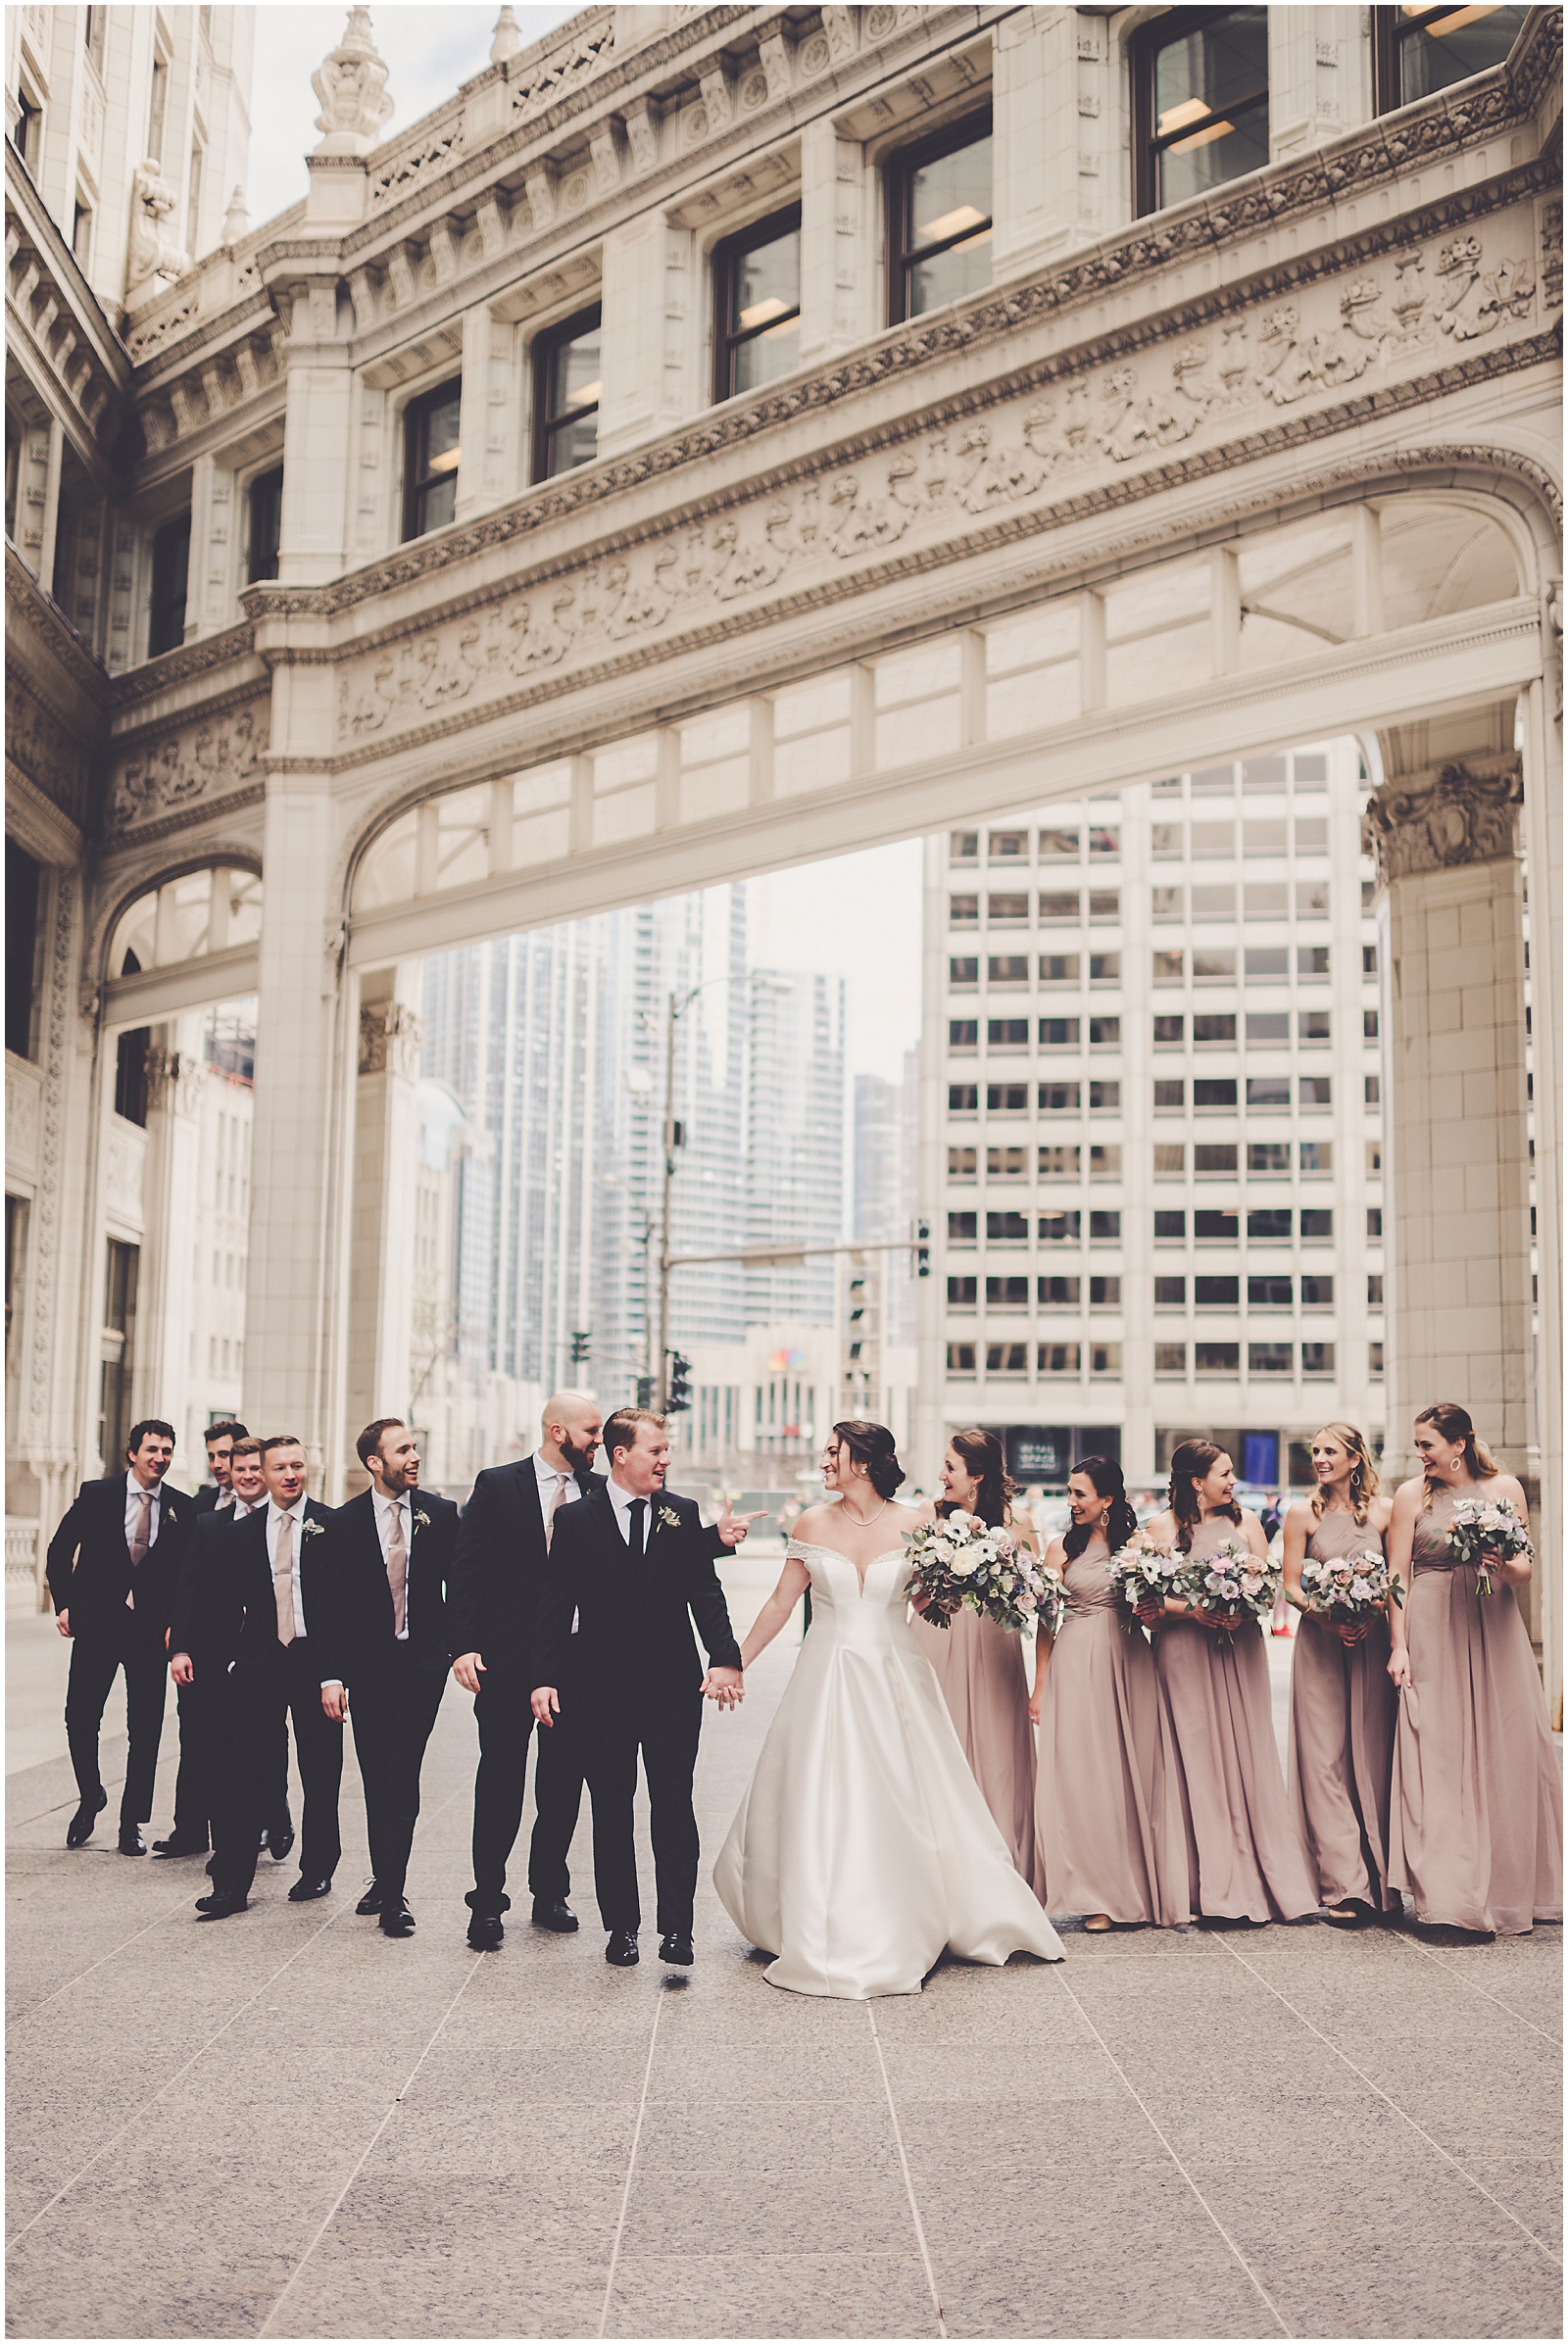 Kim and Josh's elegant spring Greenhouse Loft wedding in Chicago, Illinois with Chicagoland wedding photographer Kara Evans Photographer.